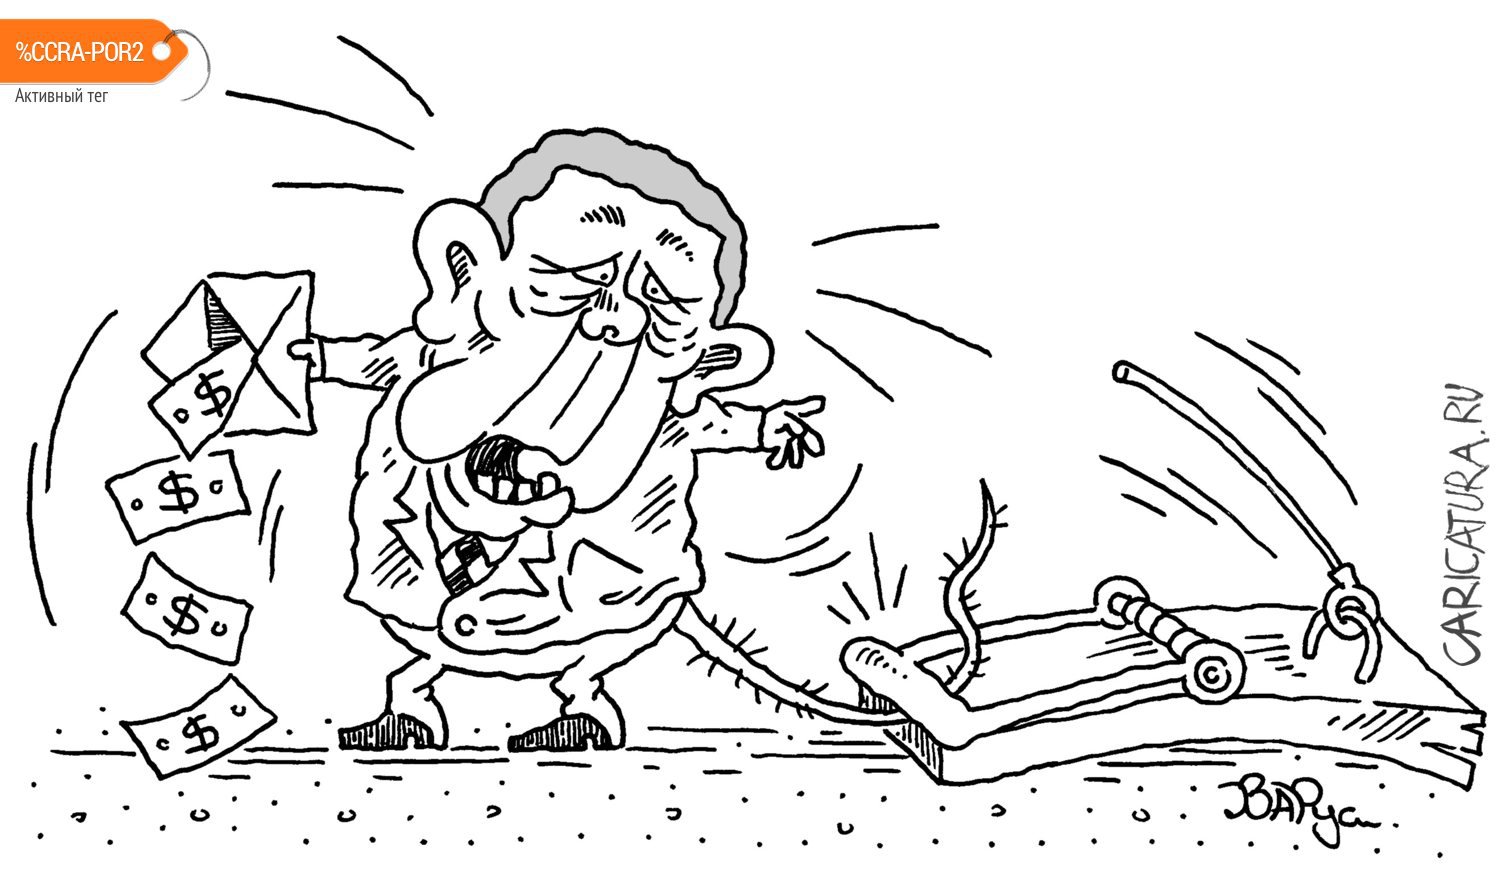 Карикатура "Попался", Руслан Валитов